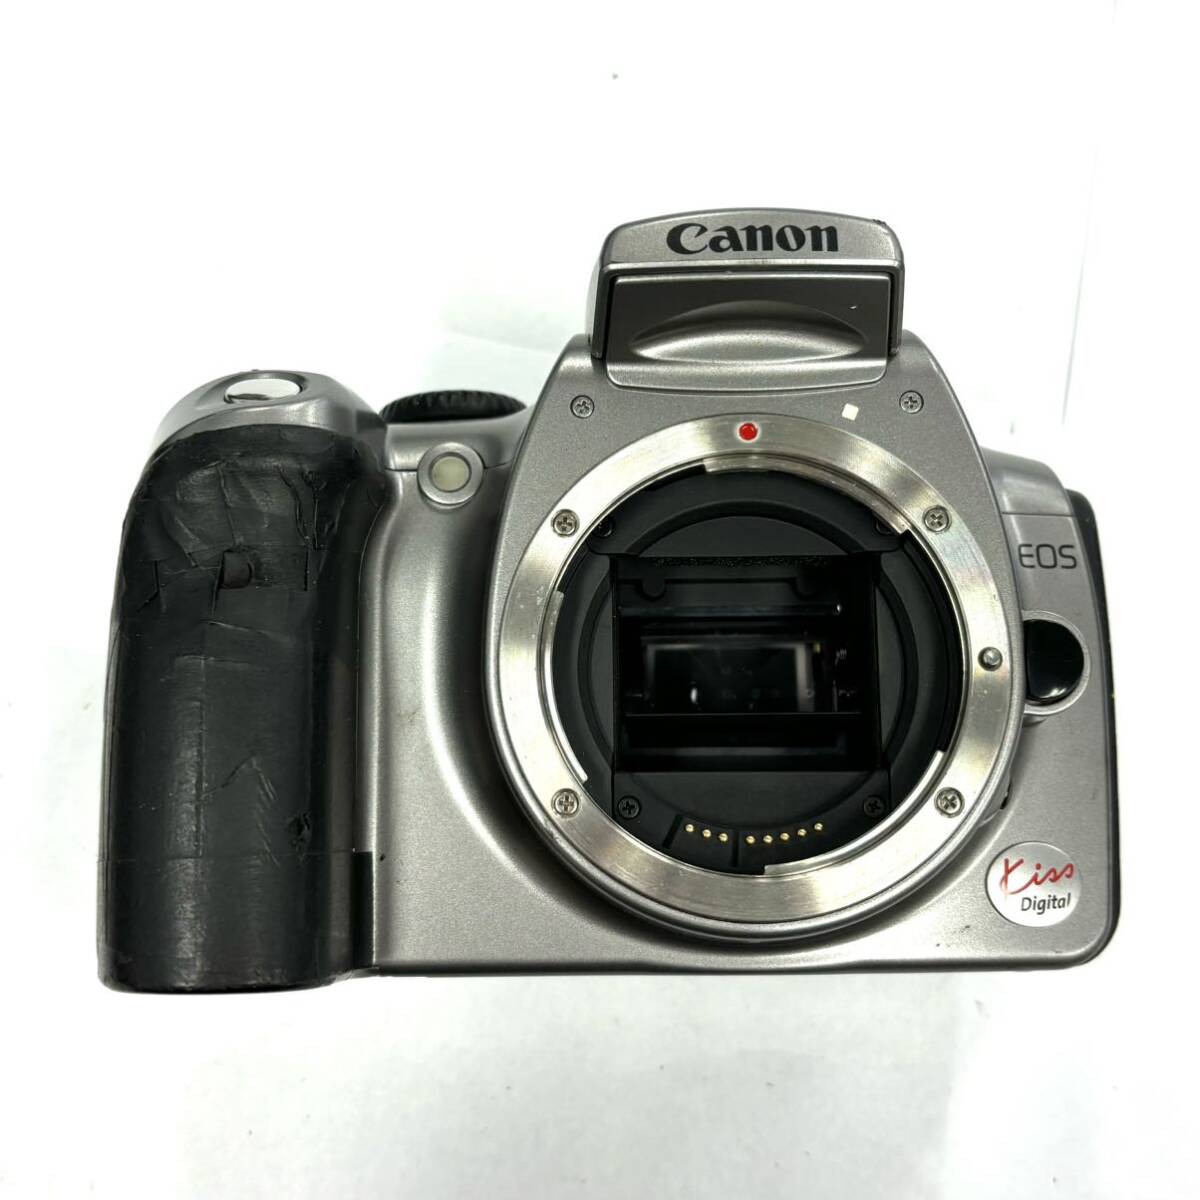 H2906 カメラ まとめ フィルムカメラ デジタルカメラ Canon キヤノン EOS Kiss DS6041 FUJI TW-300 DATE MINOLTA ミノルタ Capios25 中古の画像10